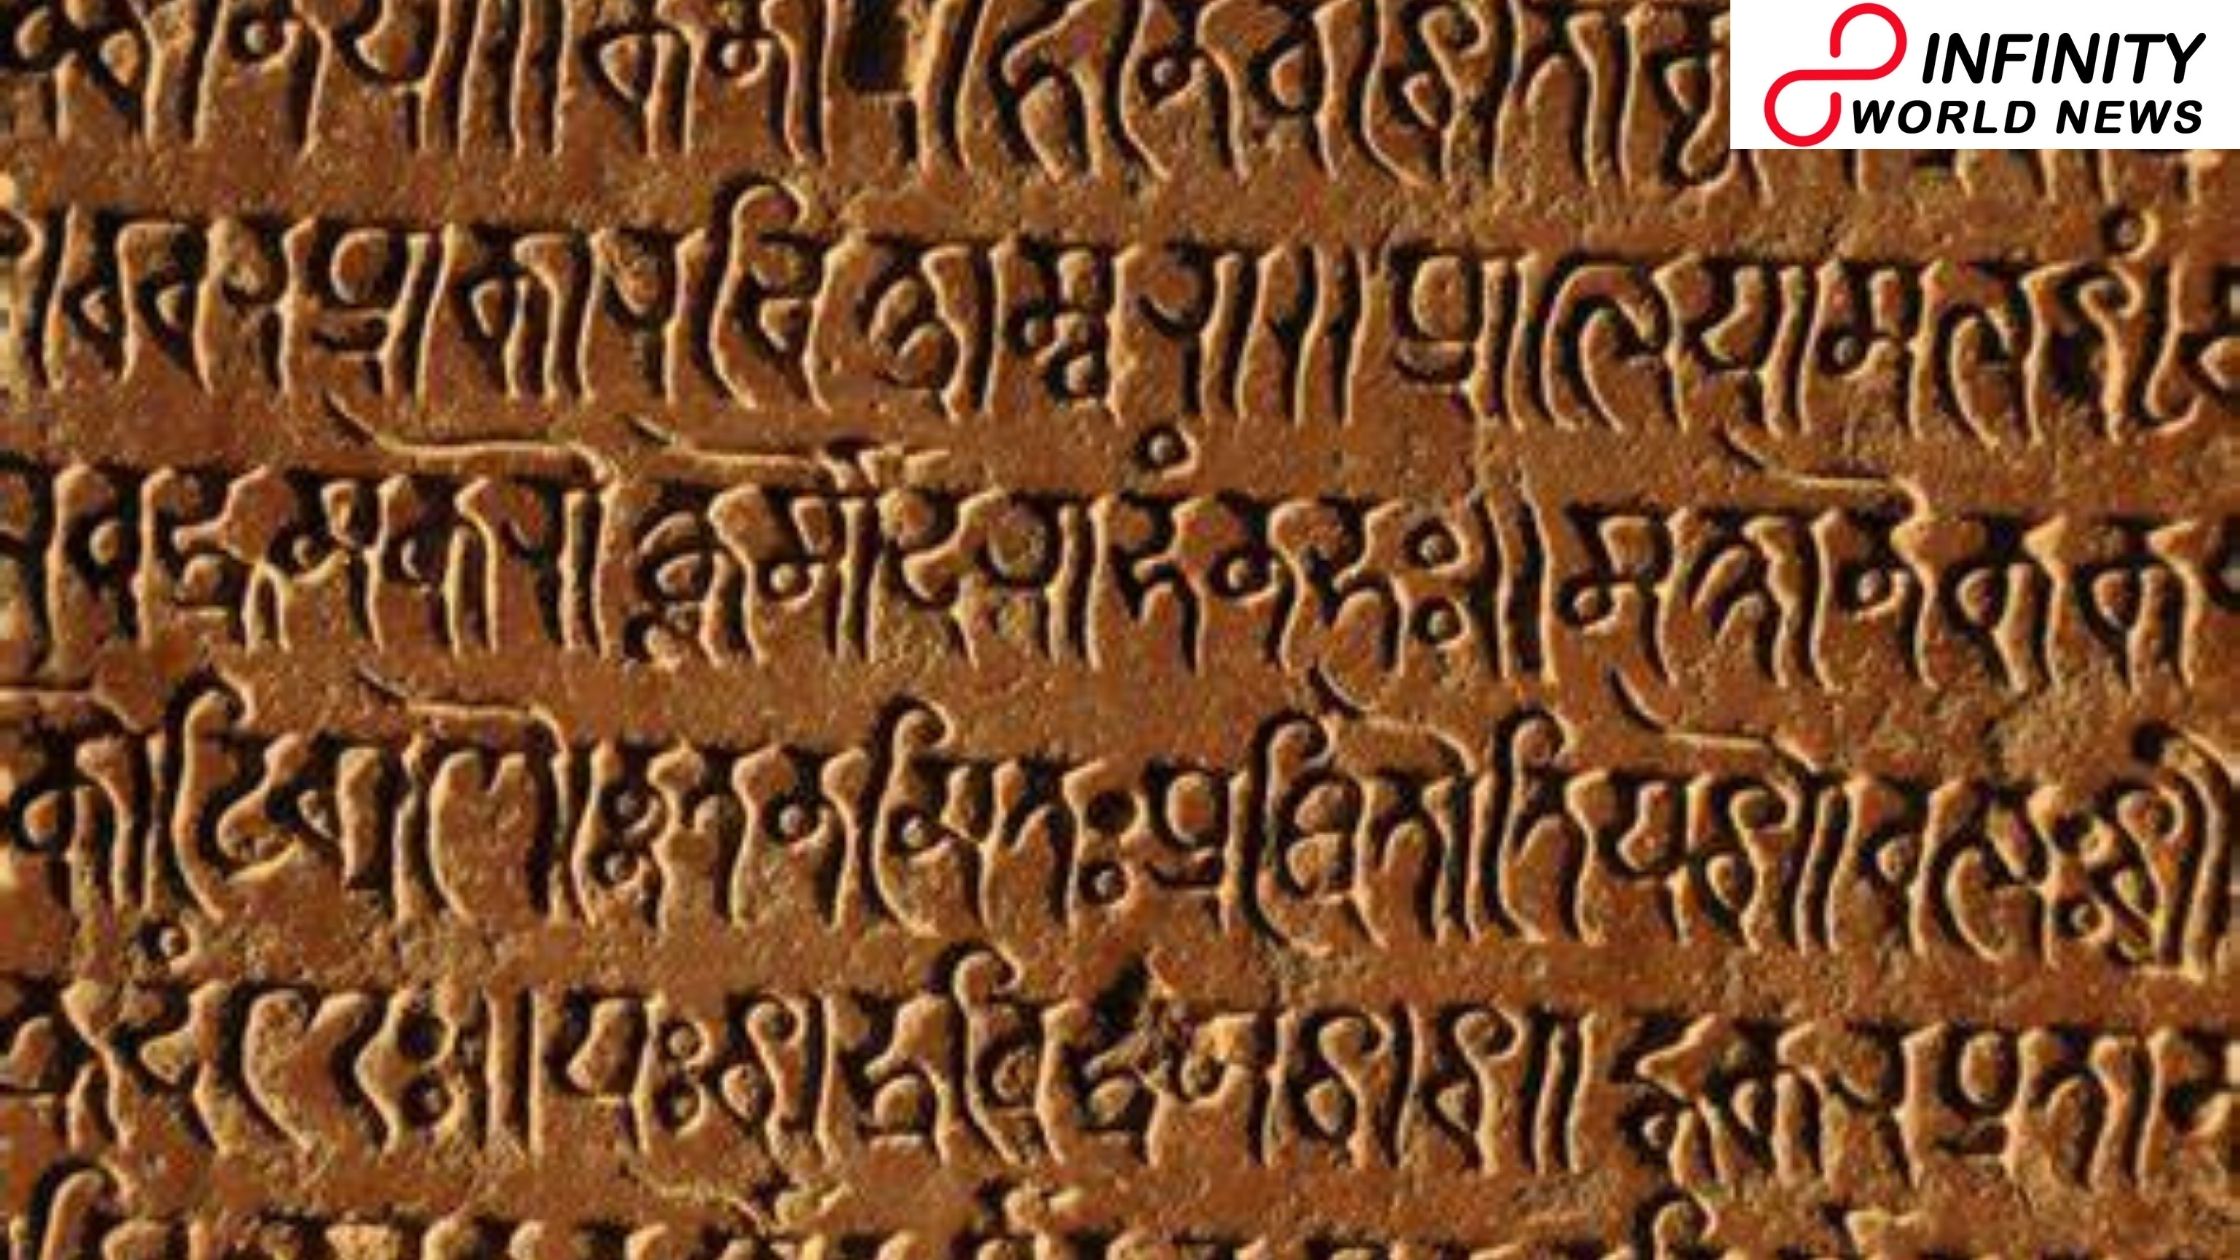 Sanskrit 5th Most Applied Language into Rajya Sabha following Hindi, Urdu